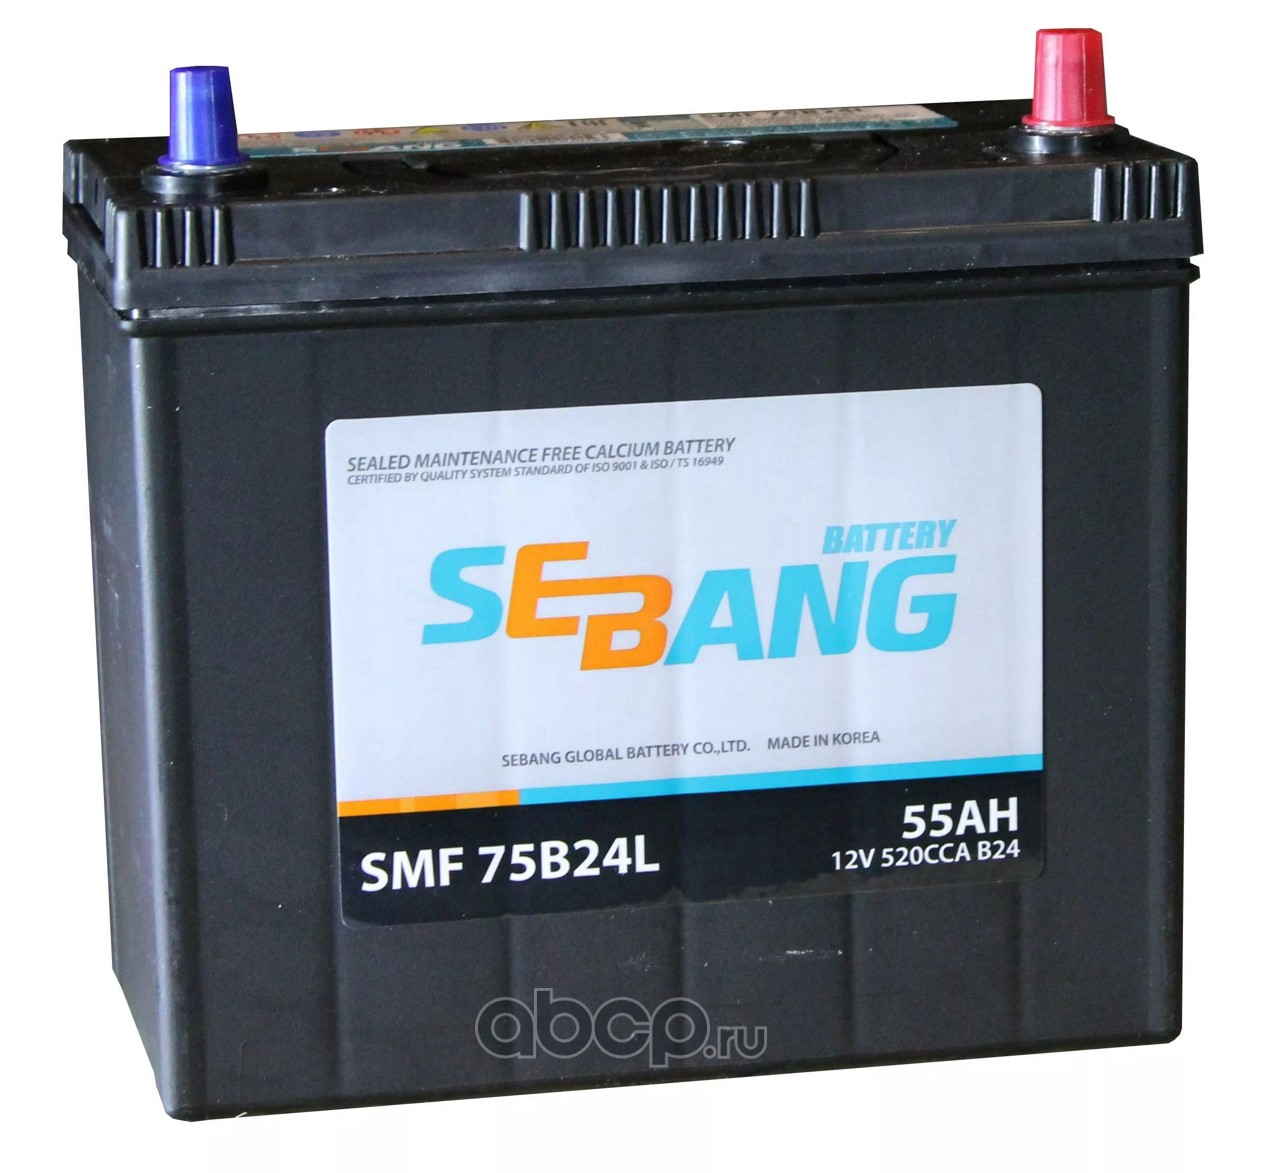 SEBANG SMF75B24L